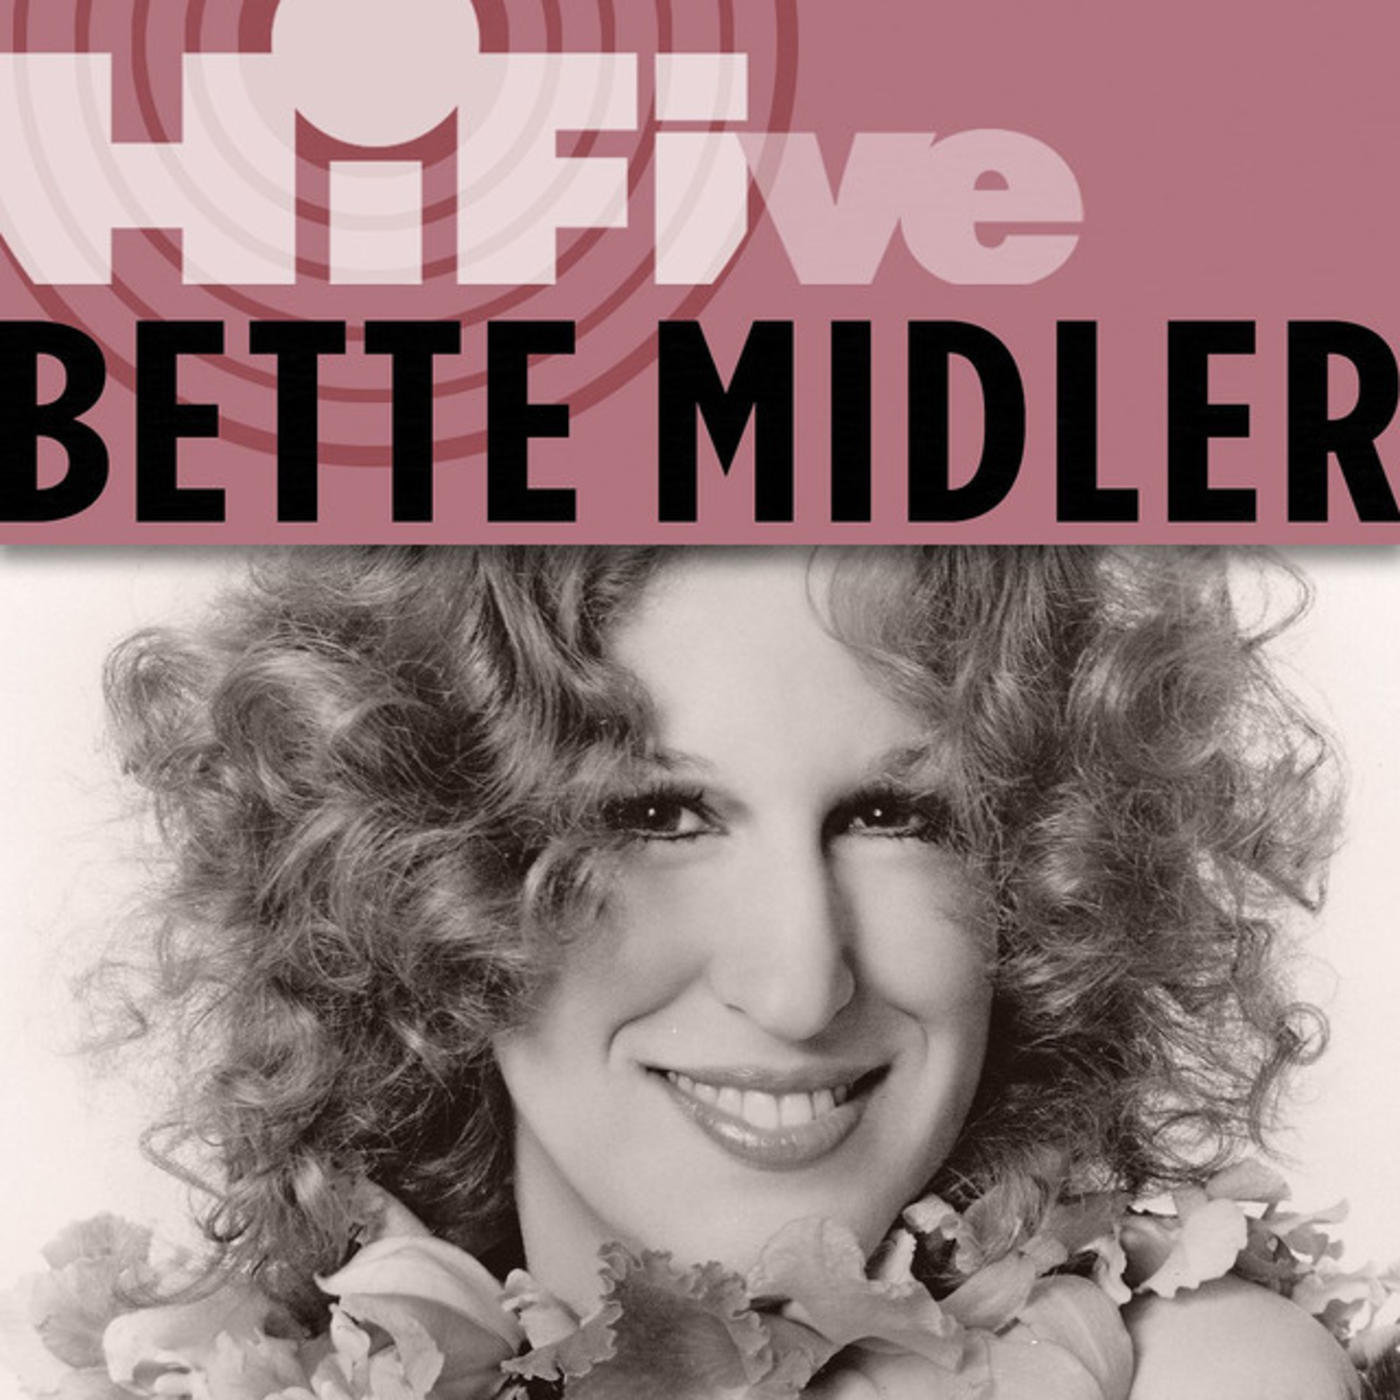 Rhino Hi-Five: Bette Midler